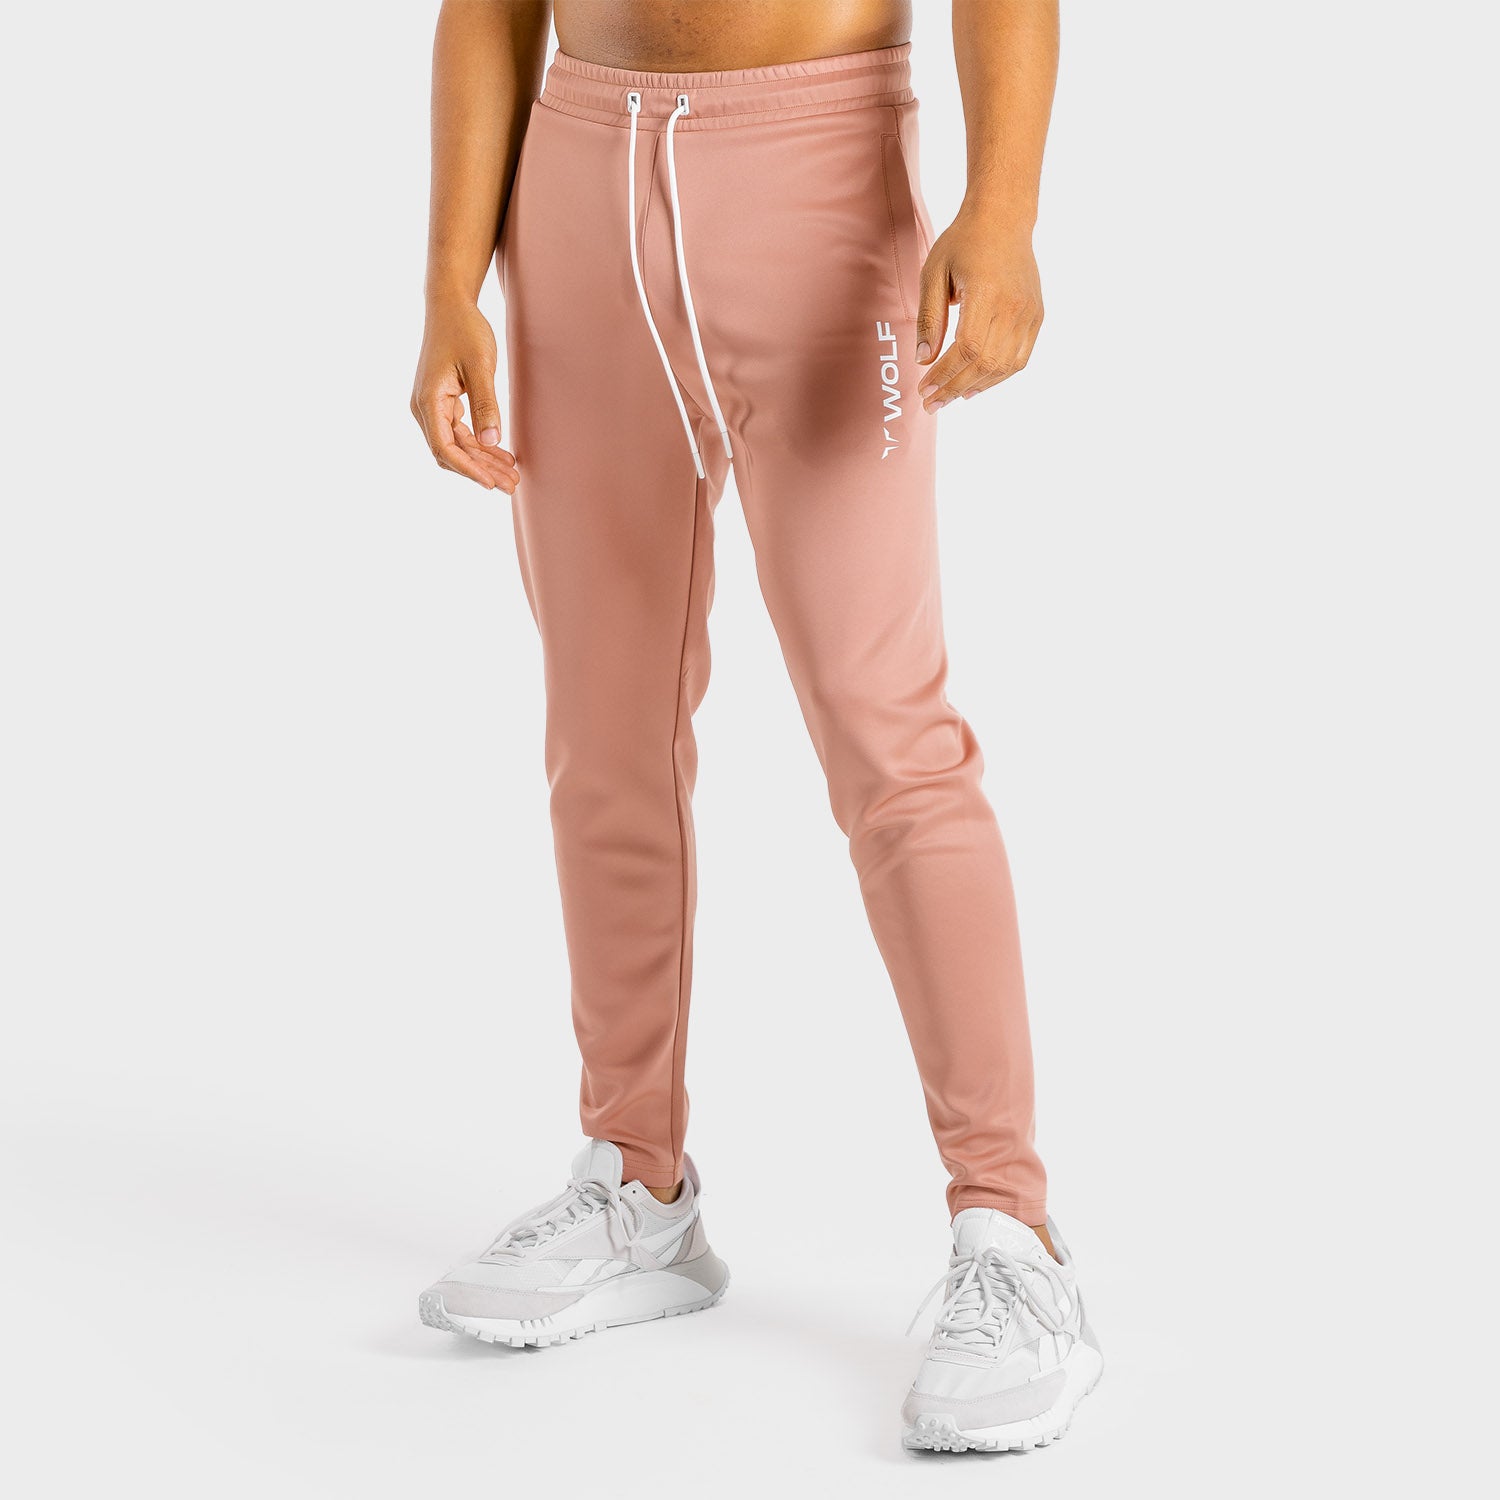 squatwolf-gym-wear-primal-joggers-men-pink-workout-pants-for-men